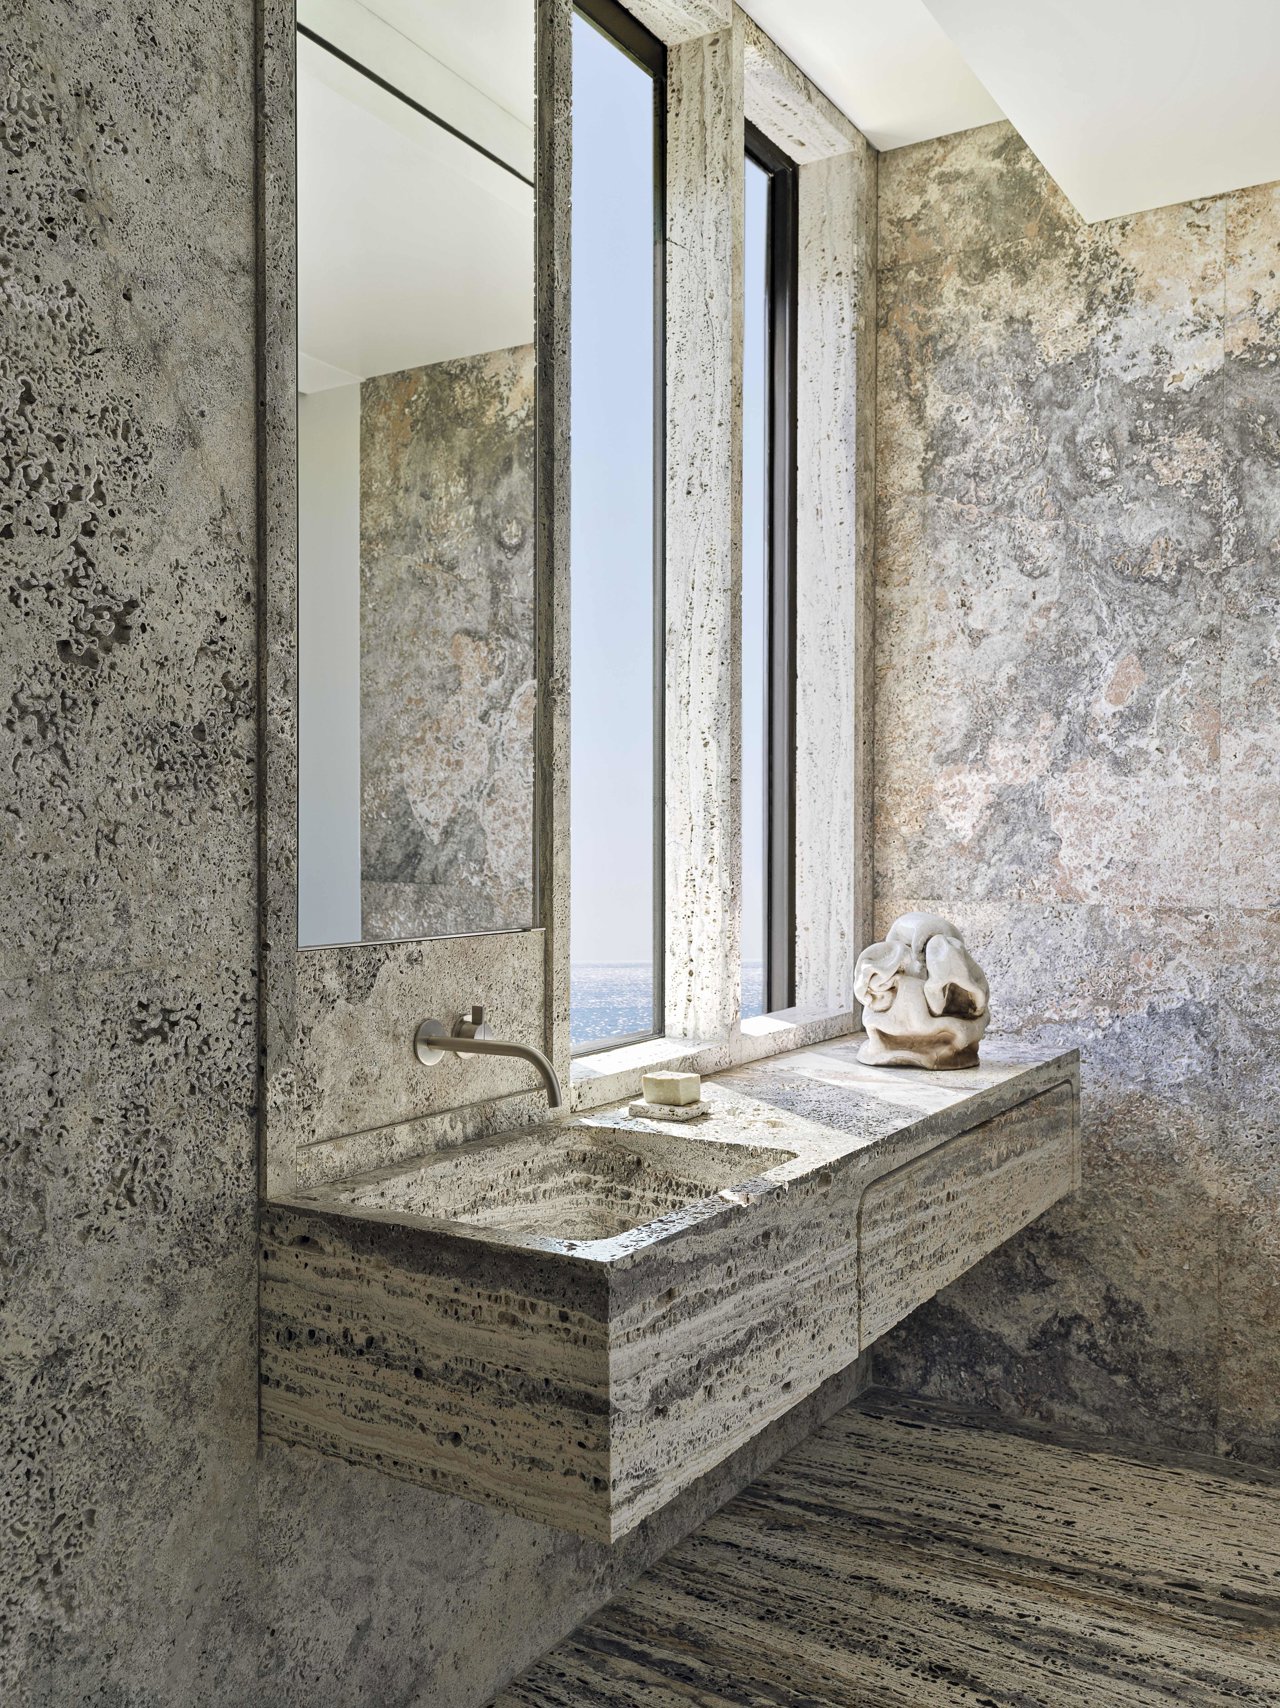 Un baño con total look de mármol travertino. Foto: Stephan Julliard